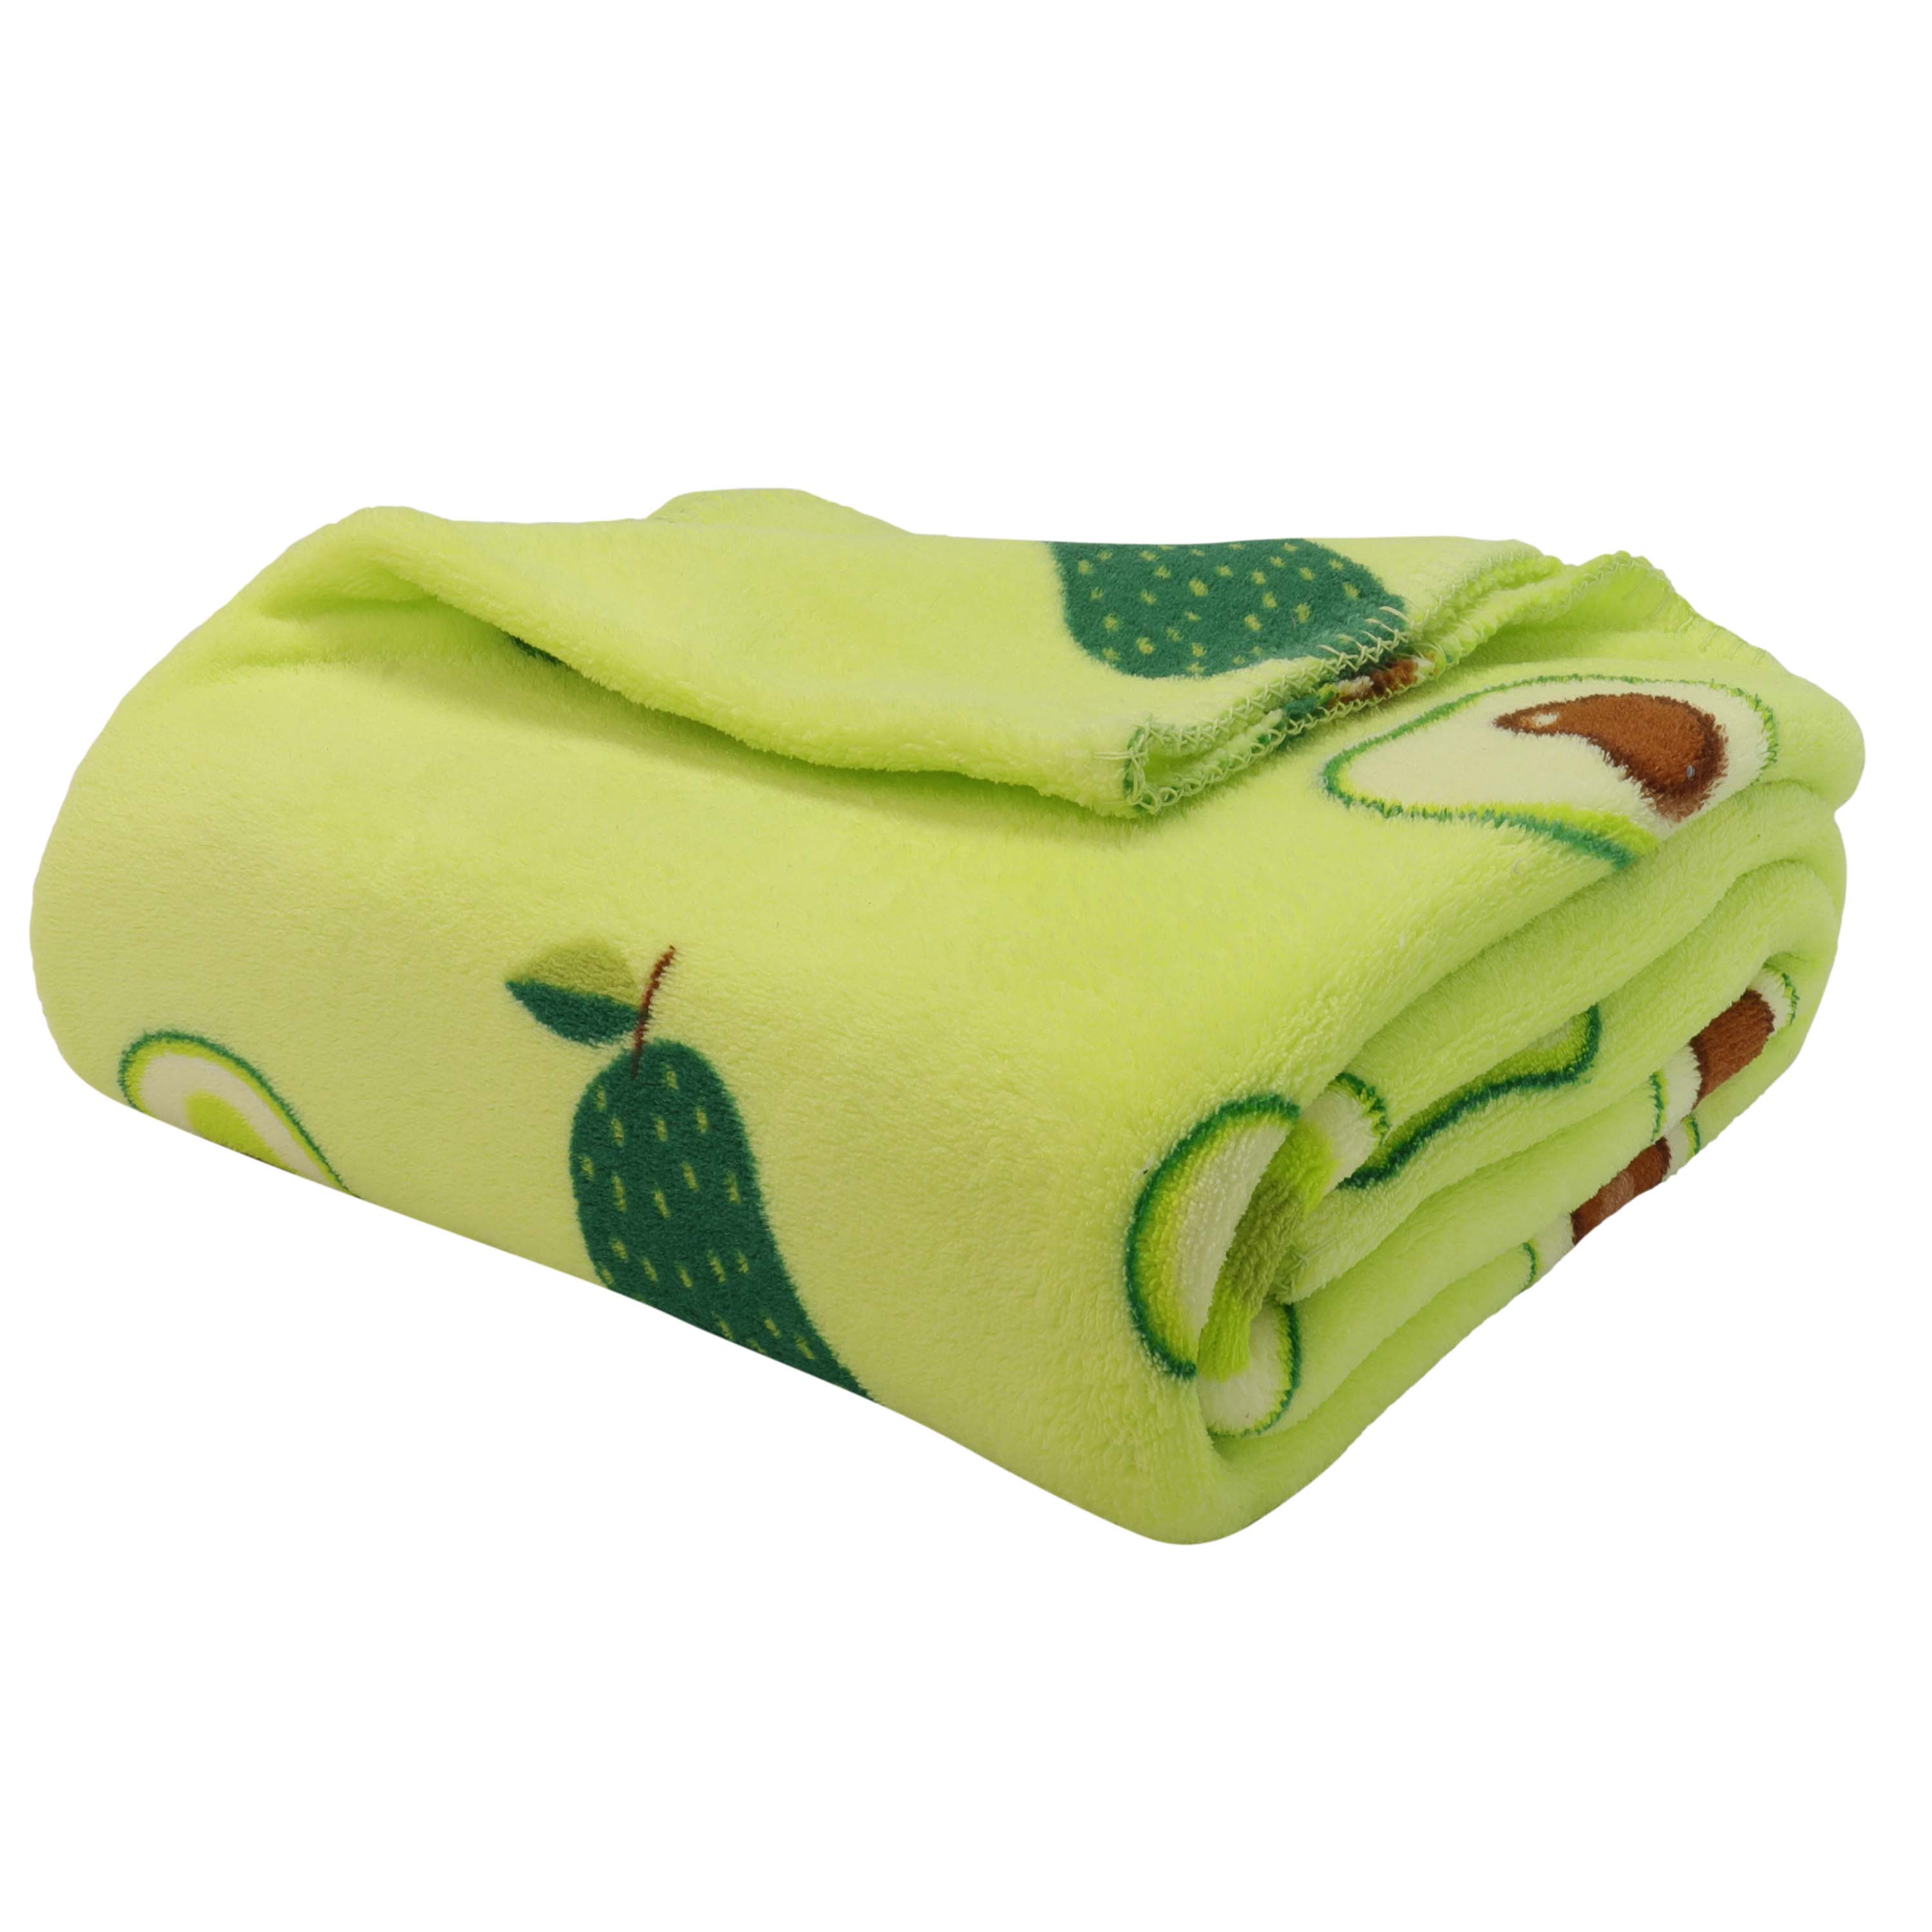 Mainstays Fleece Plush Throw Blanket, 50" x 60", Avocados, 2-Pack - image 5 of 11